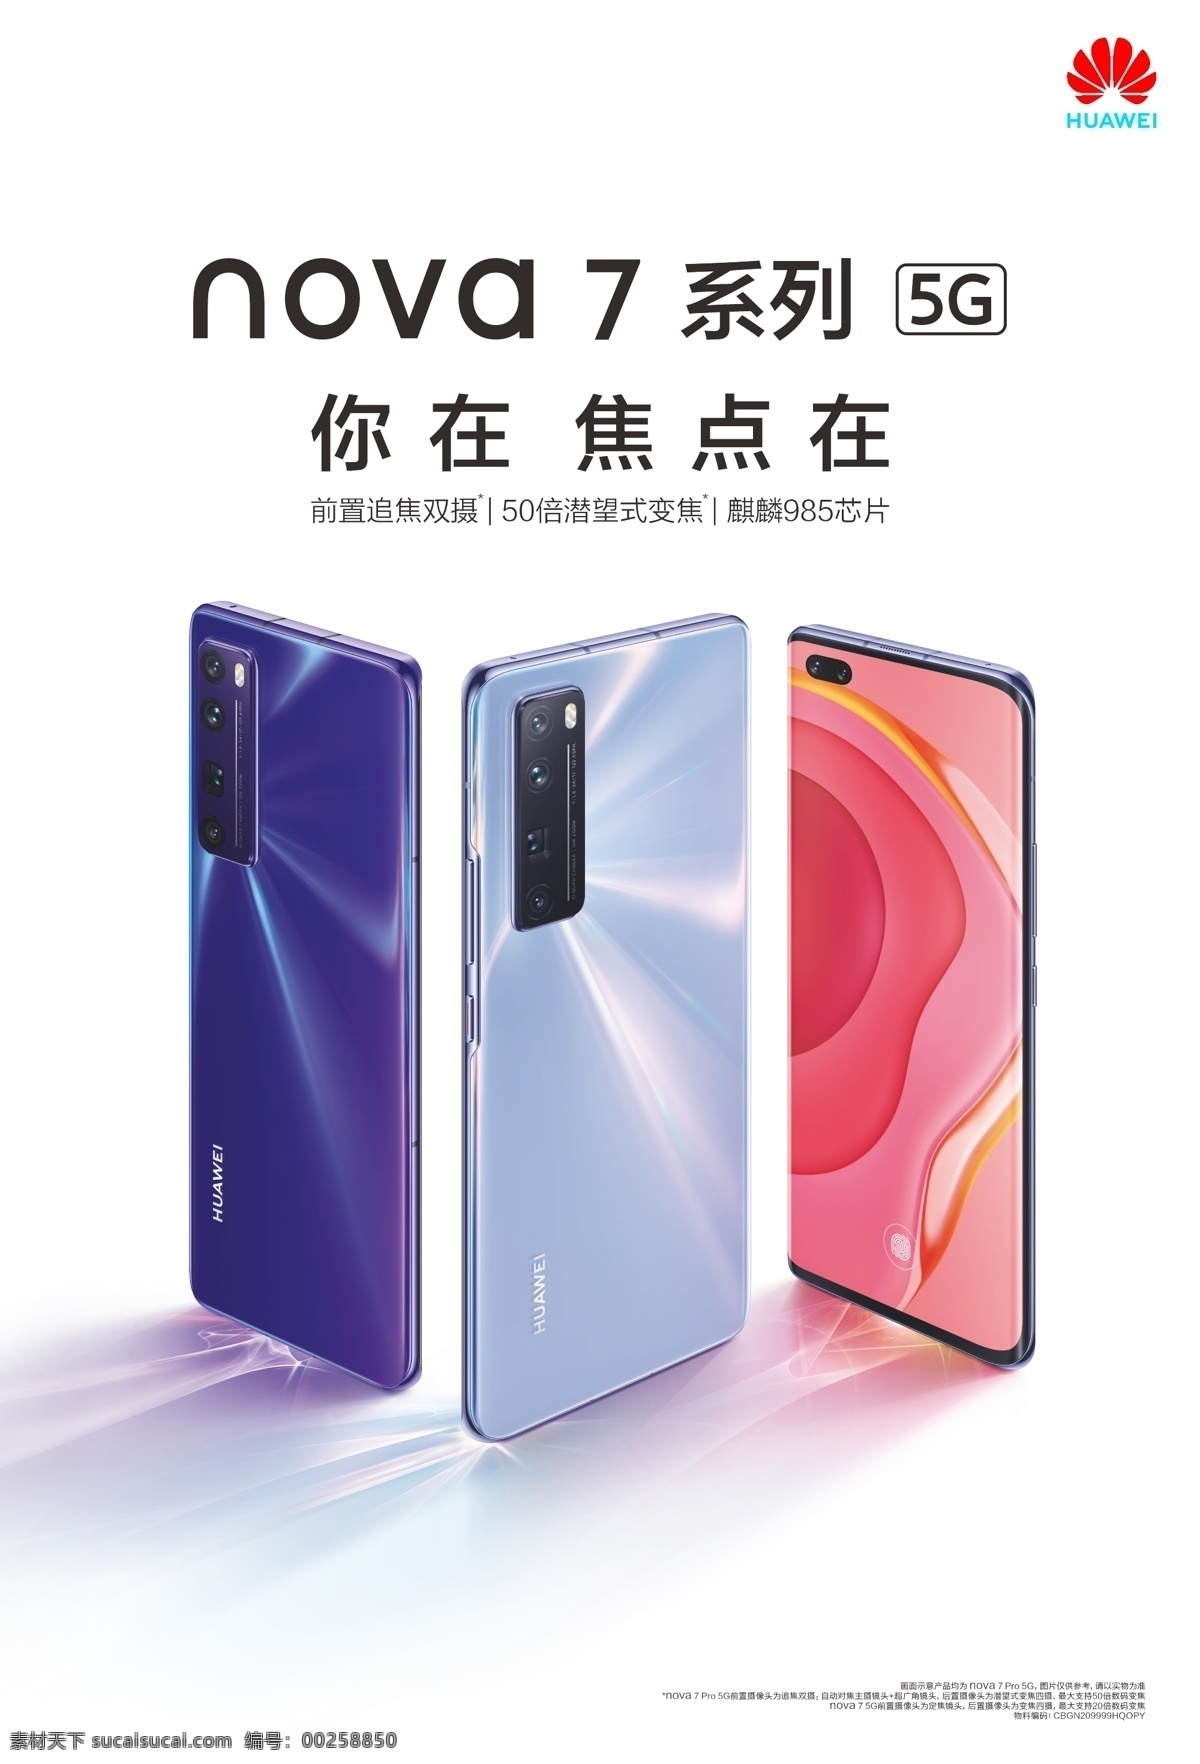 nova 手机 5g nova7 华为 华为手机 huawei 5g手机 5g技术 海报